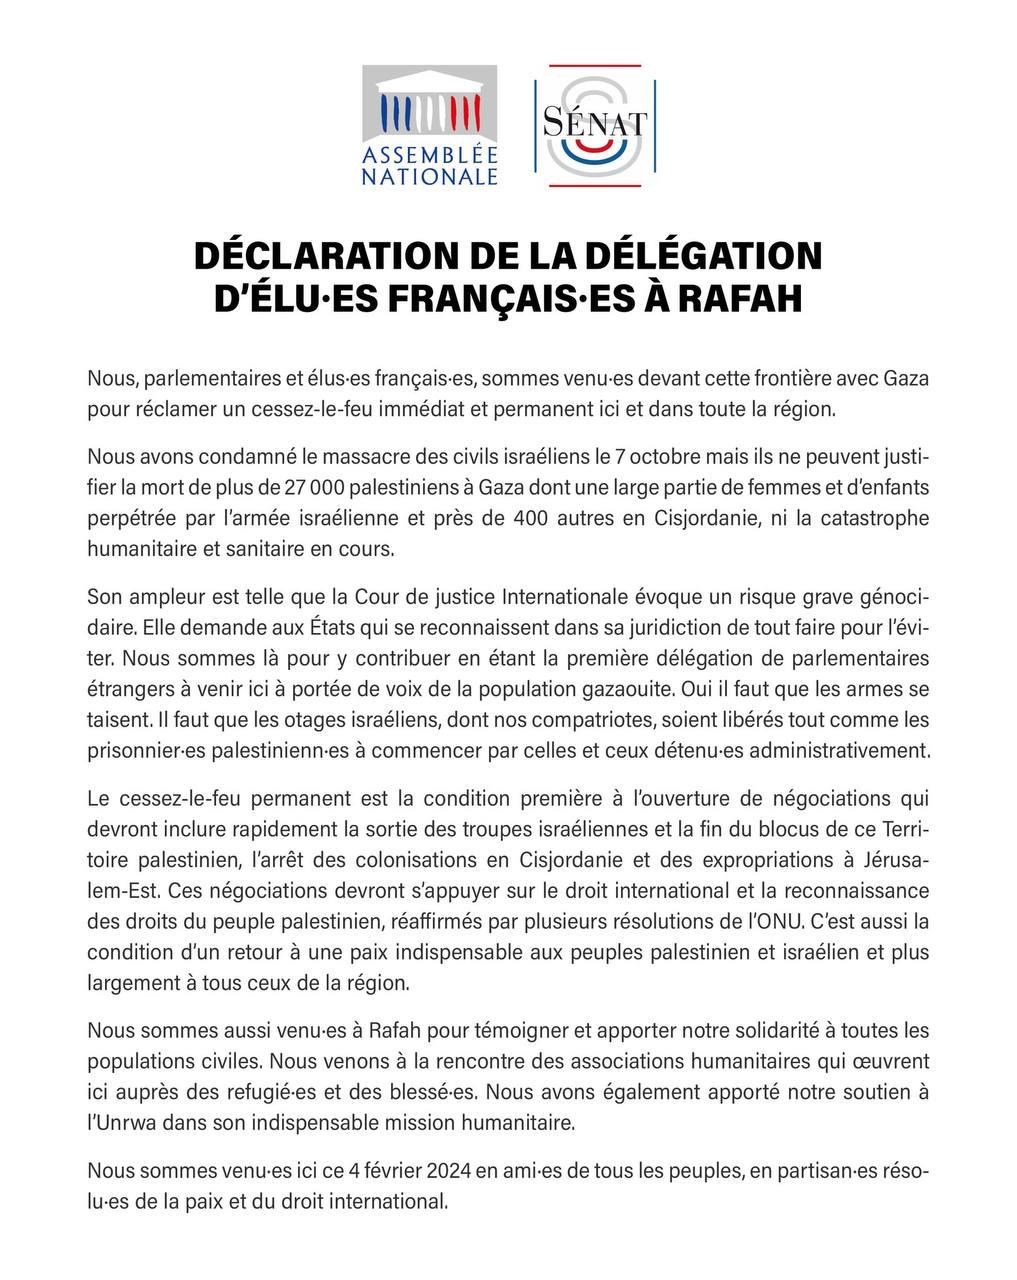 Delegation coquerel Egypte 4 fev 24 La declaration